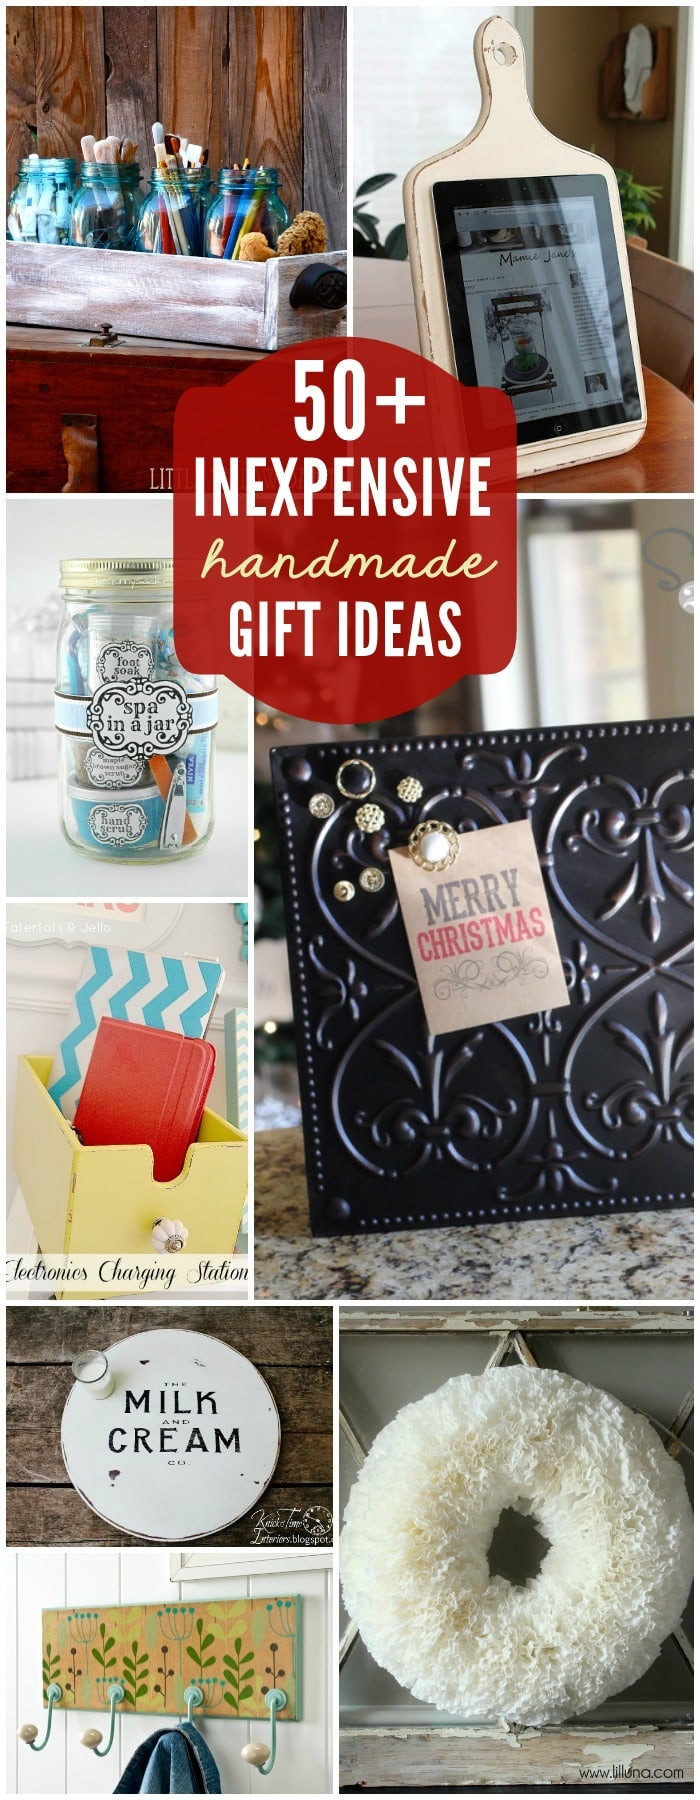 Christmas Gift Ideas DIY
 75 Gift Ideas under $5